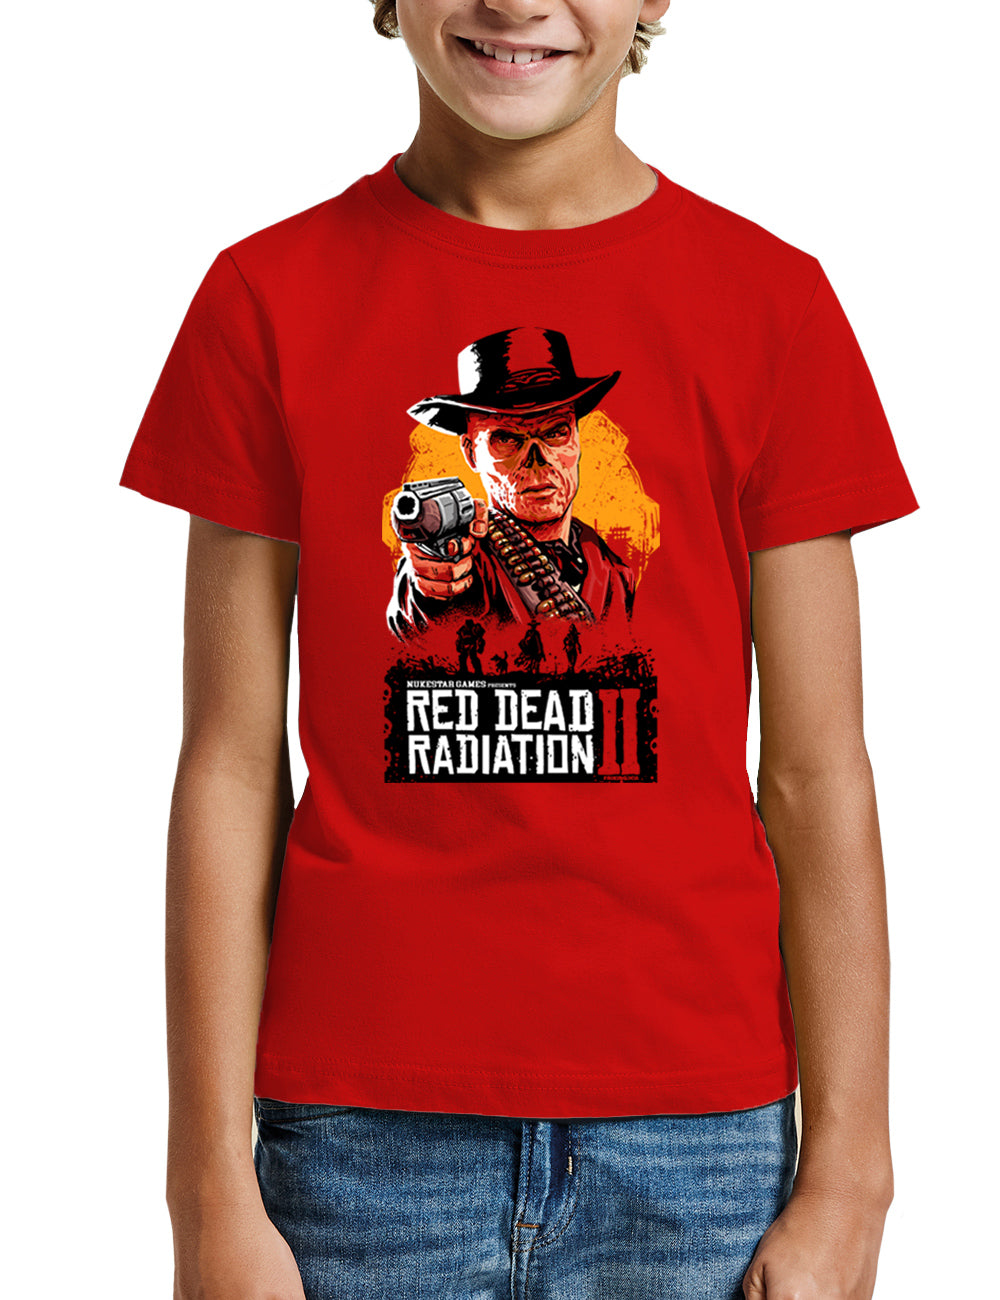 Red dead radiation